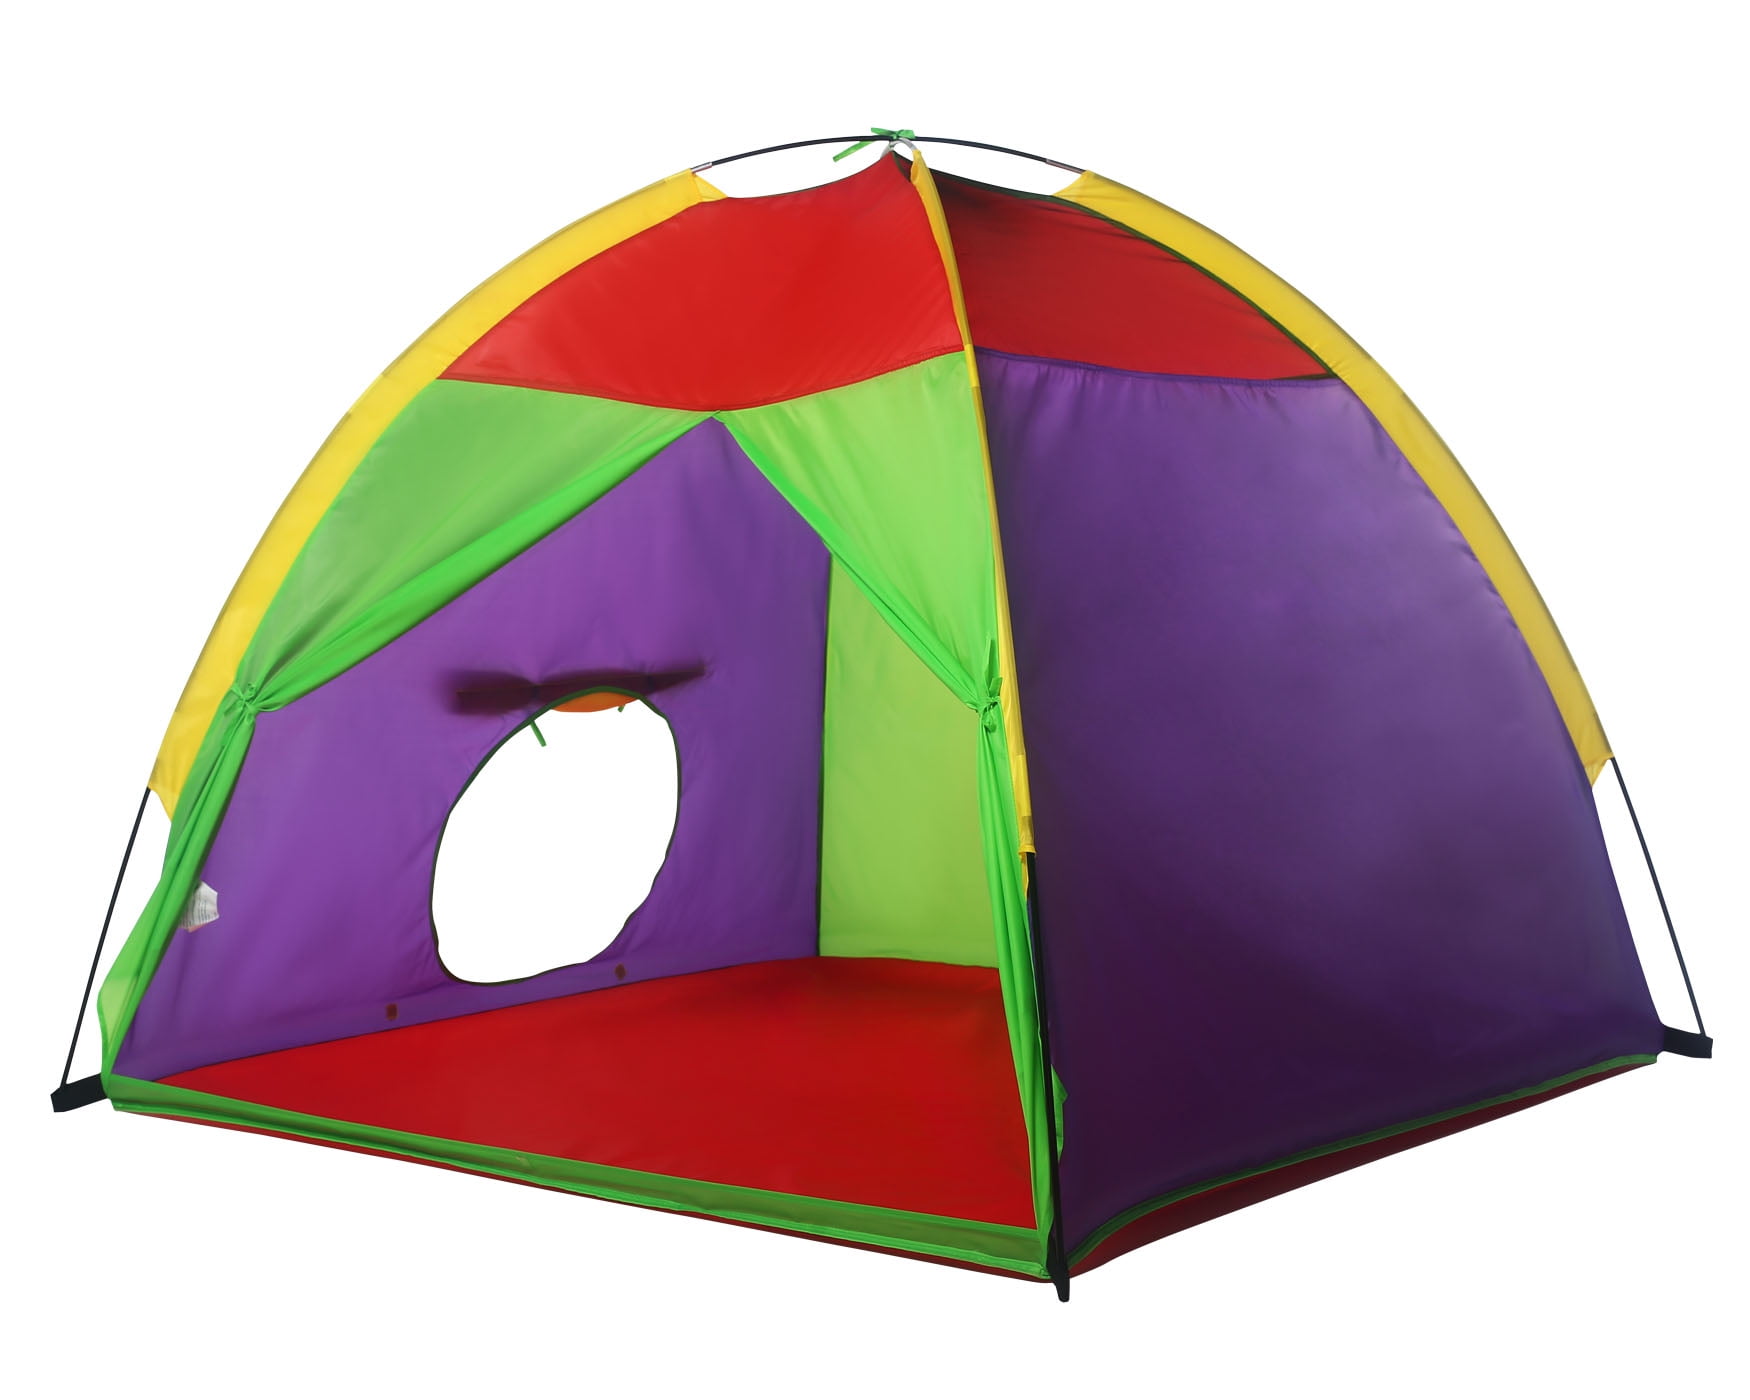 Pops Up No... Great Playhouse Tent for Indoor/Outdoor Kiddey Kids Play Tent 